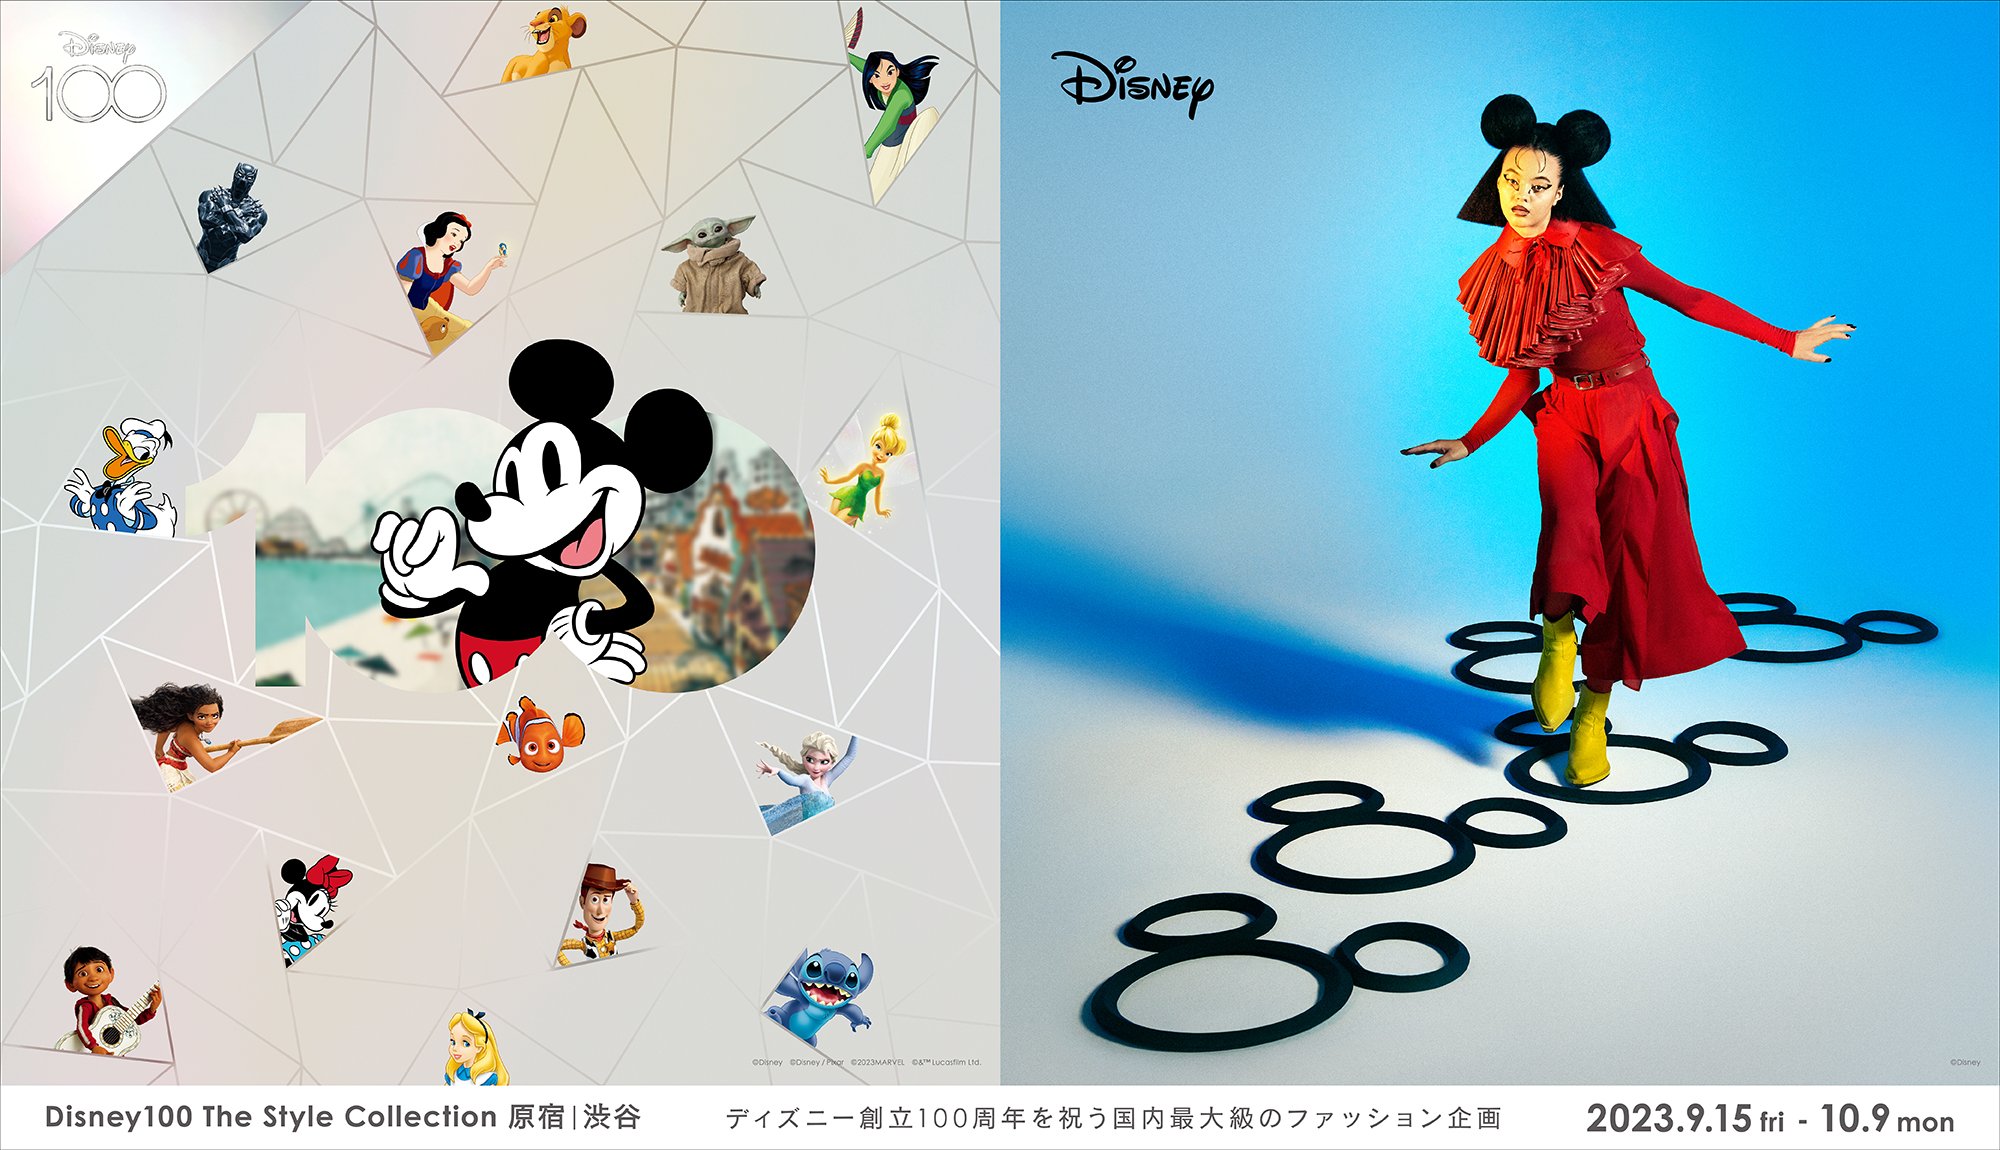 Disney100 The Styel Collection 原宿｜渋谷 ‐ディズニー創立100周年を祝う国内最大級のファッション企画-